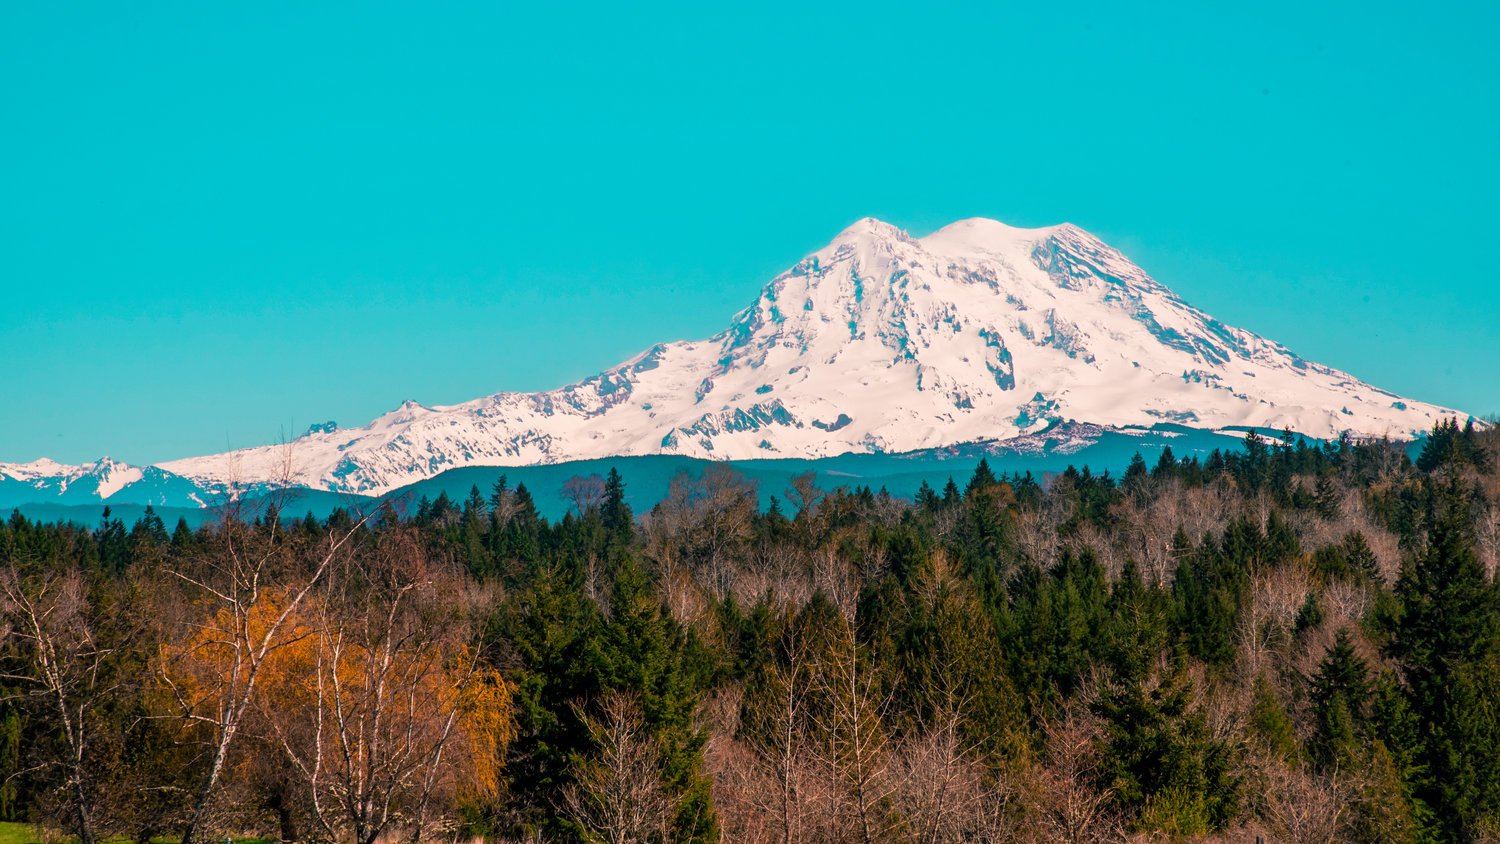 Mount Rainier as seen from Eatonville.